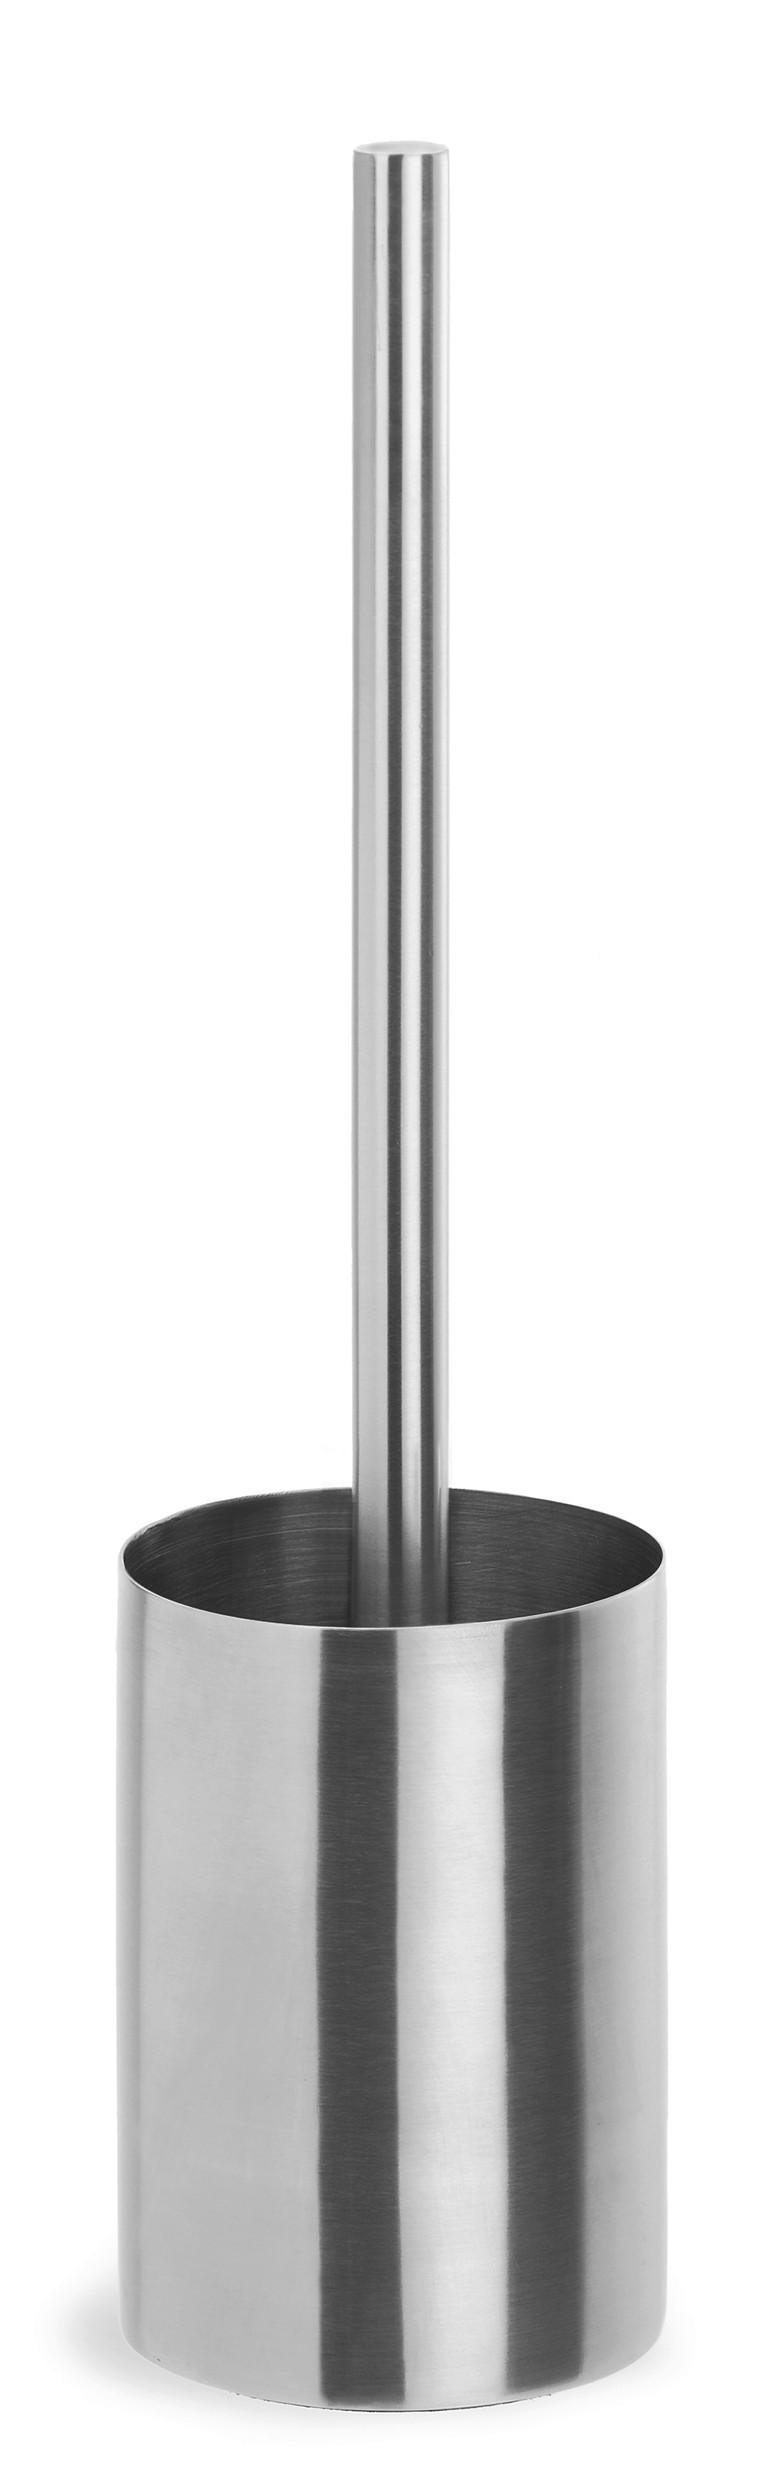 WC-BÜRSTENGARNITUR - Edelstahlfarben, Design, Kunststoff/Metall (8,8/37,0cm) - Blomus